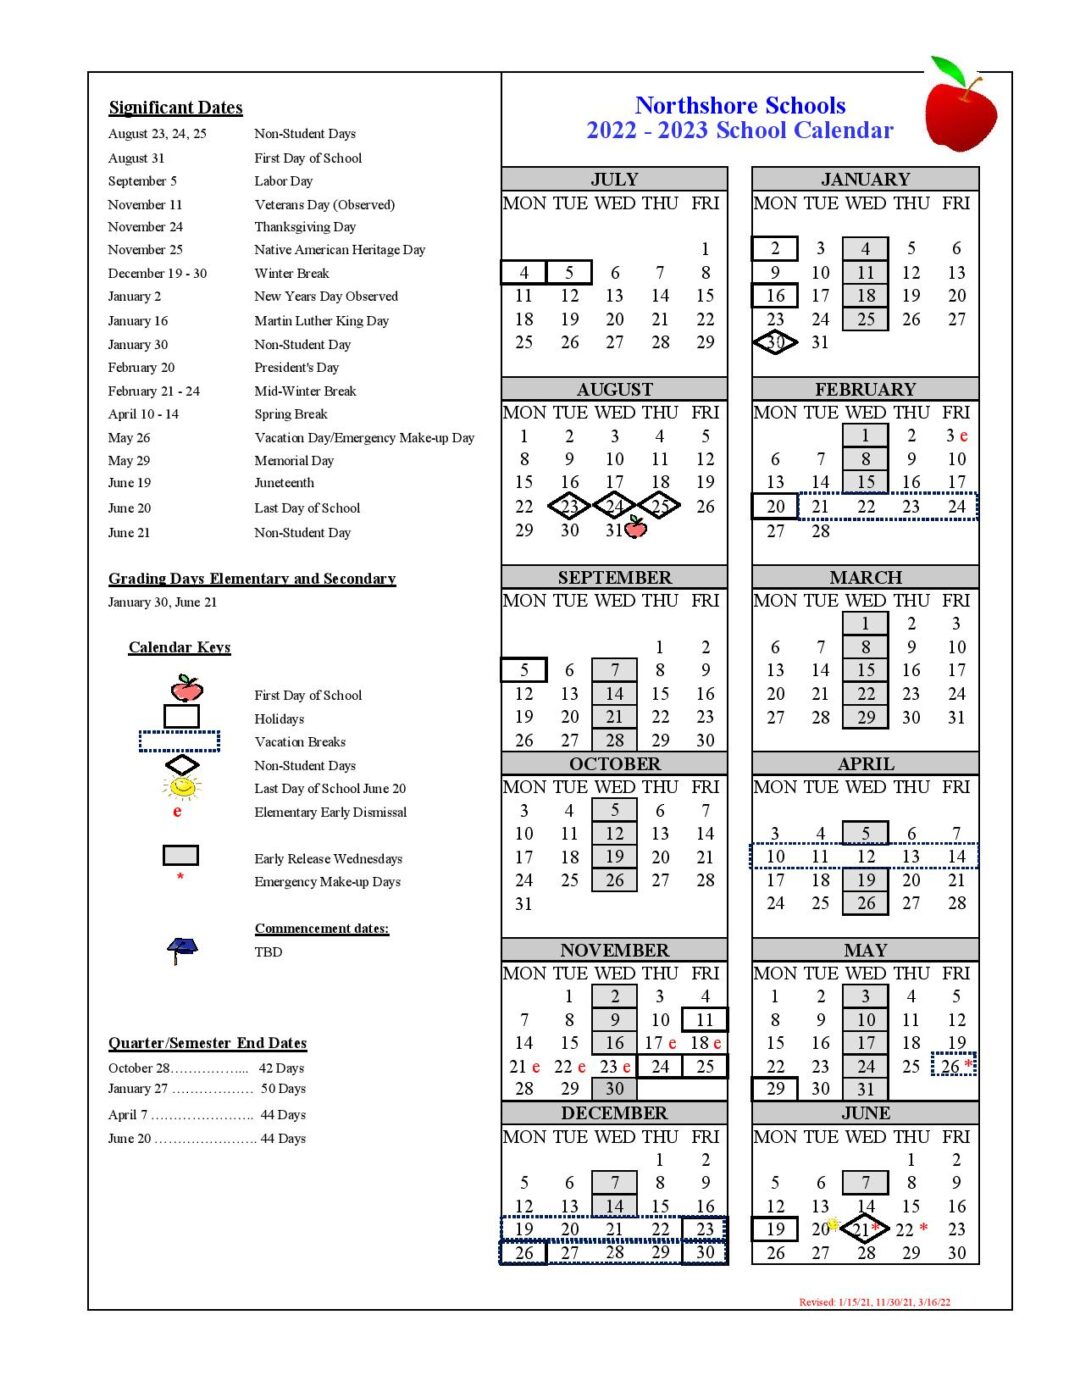 Northshore School District Calendar 2022-2023 & Holidays